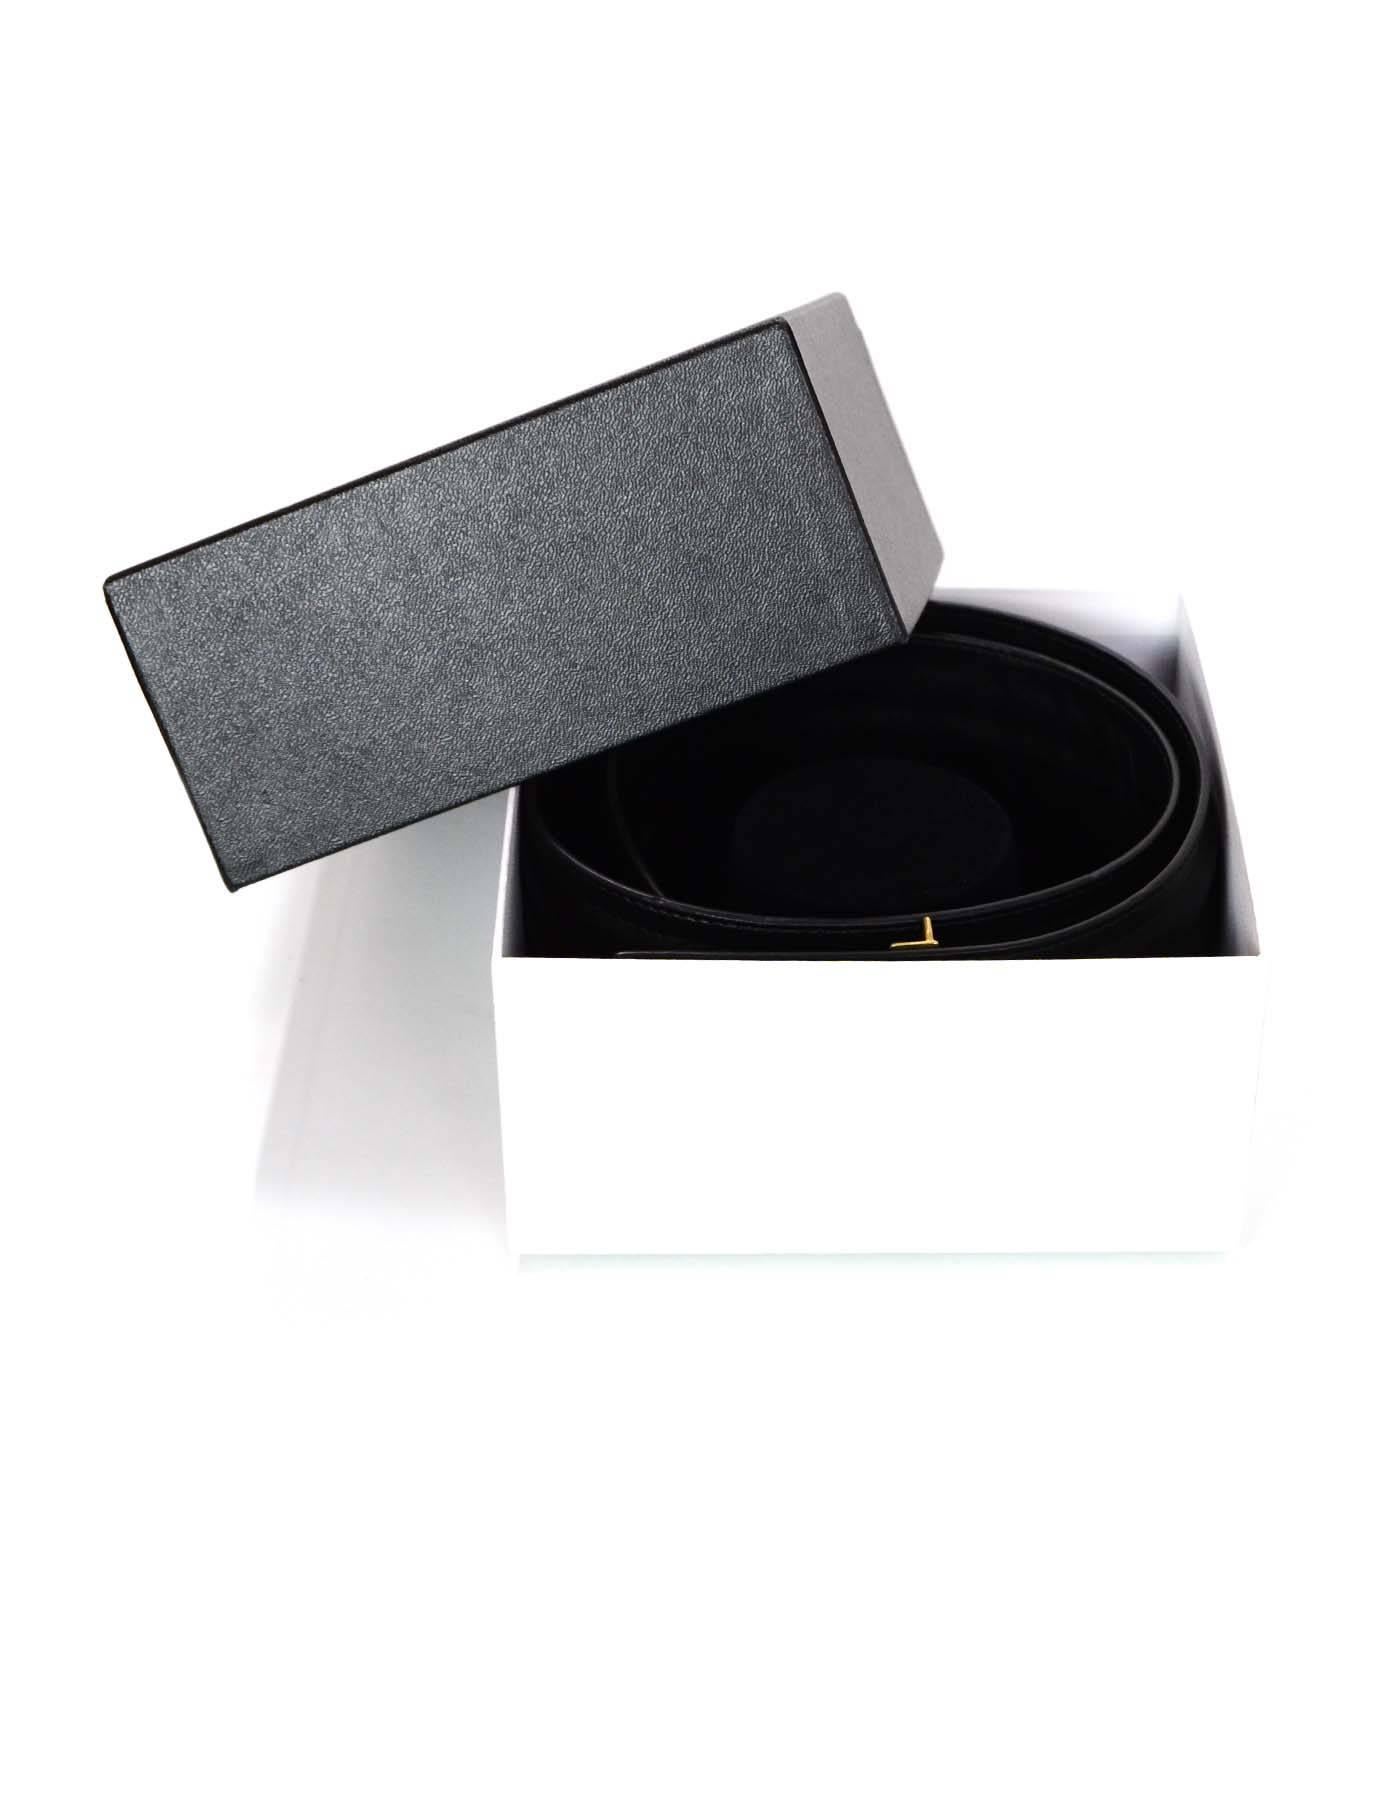 Chanel Black Leather Belt with Boy Buckle Sz 90 rt. $1, 400 1